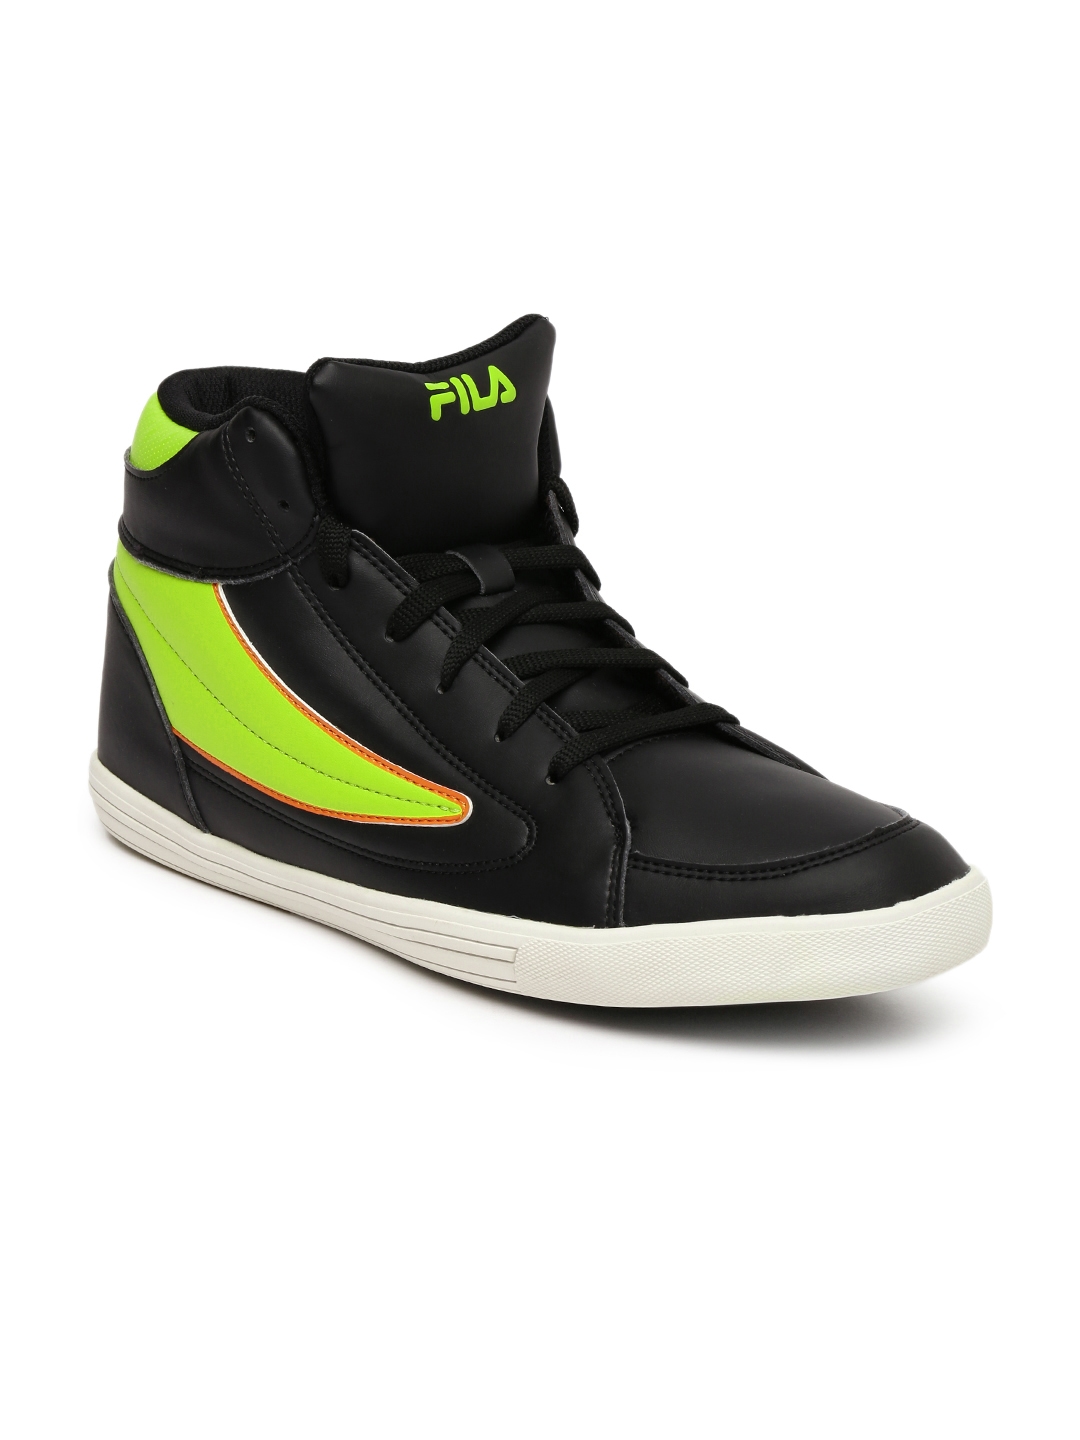 fila neon green sneakers